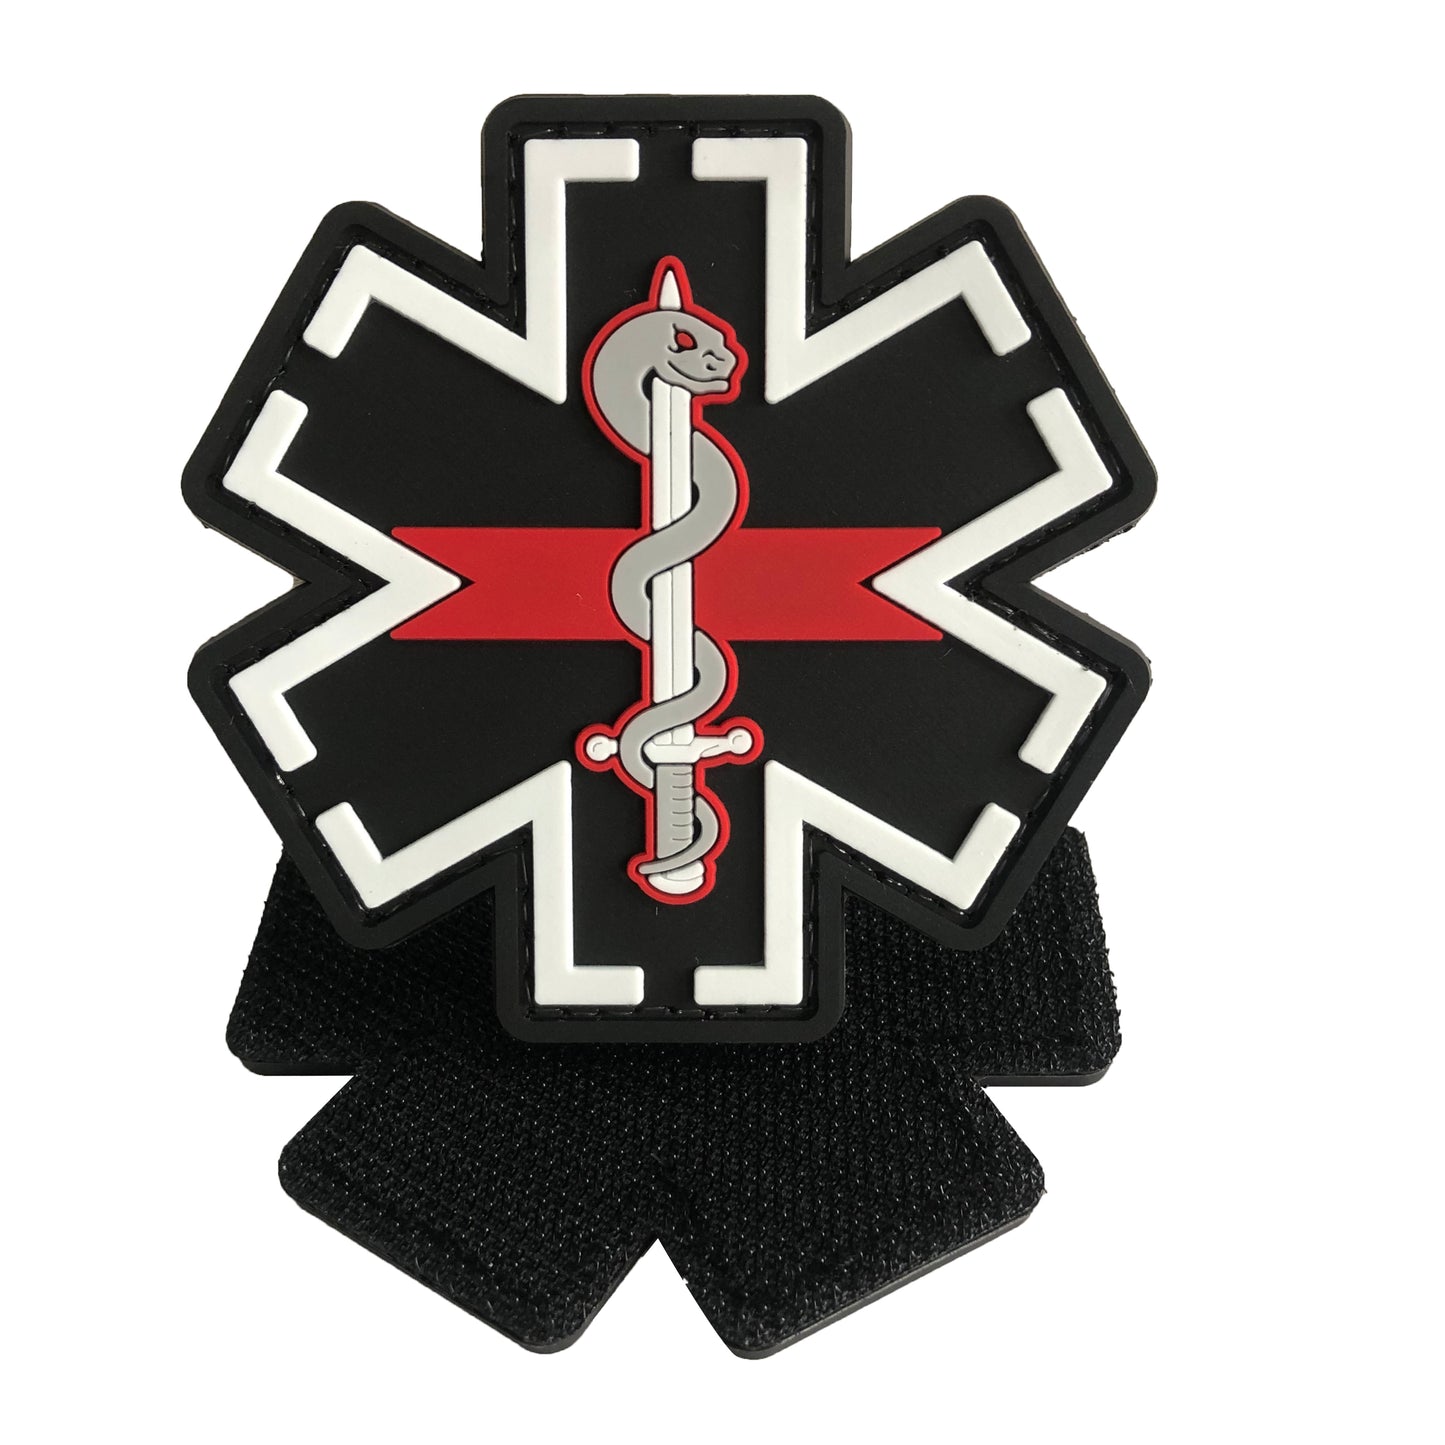 EMT-HT - Medic Paramedic EMS EMT Medical Star of Life PVC Patch with Red Line